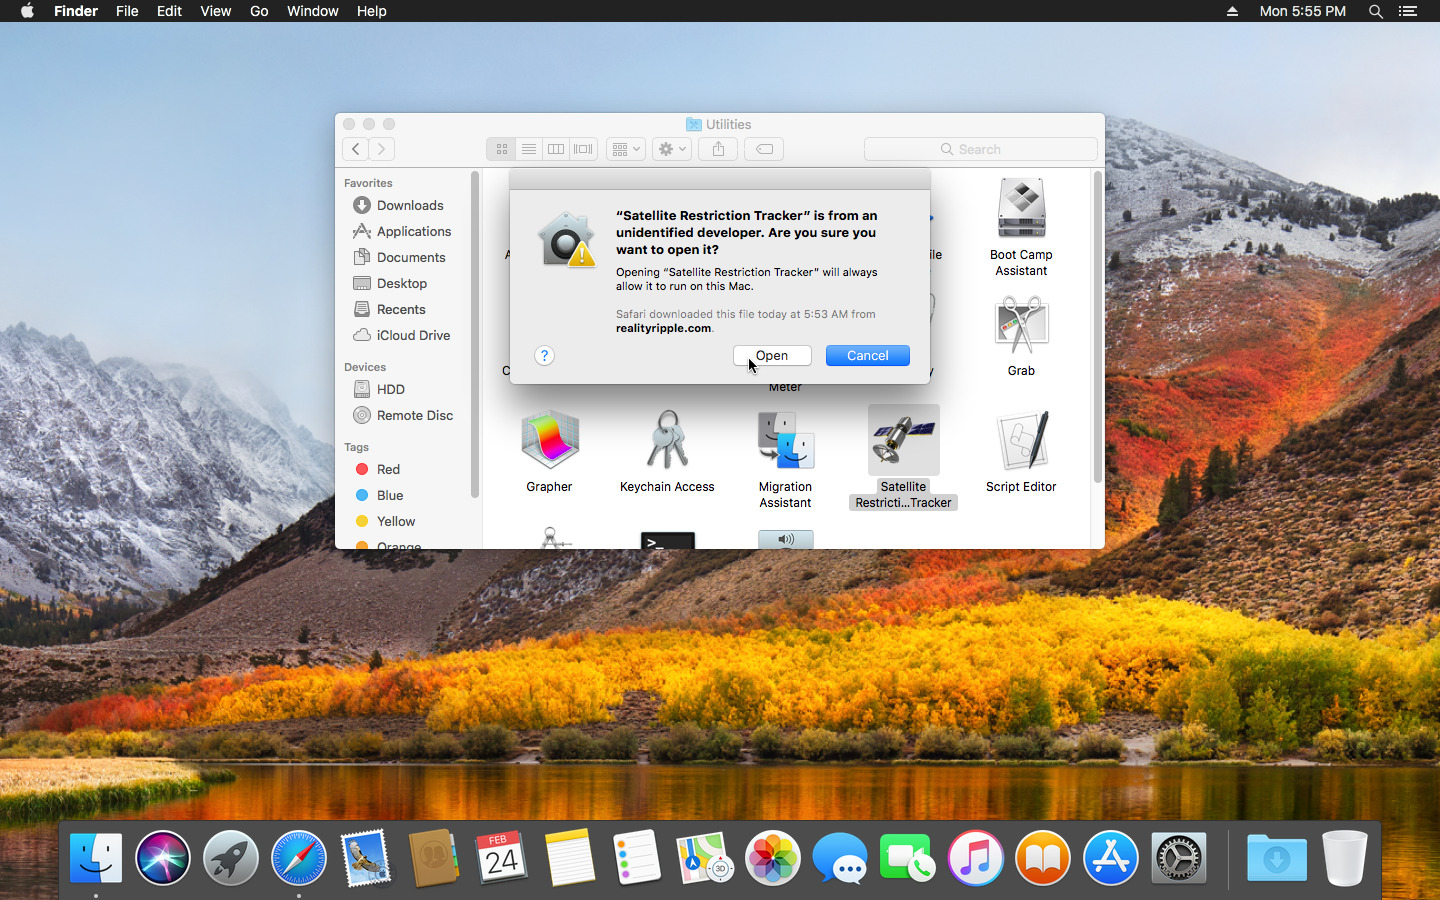 macOS 10.13
🍎